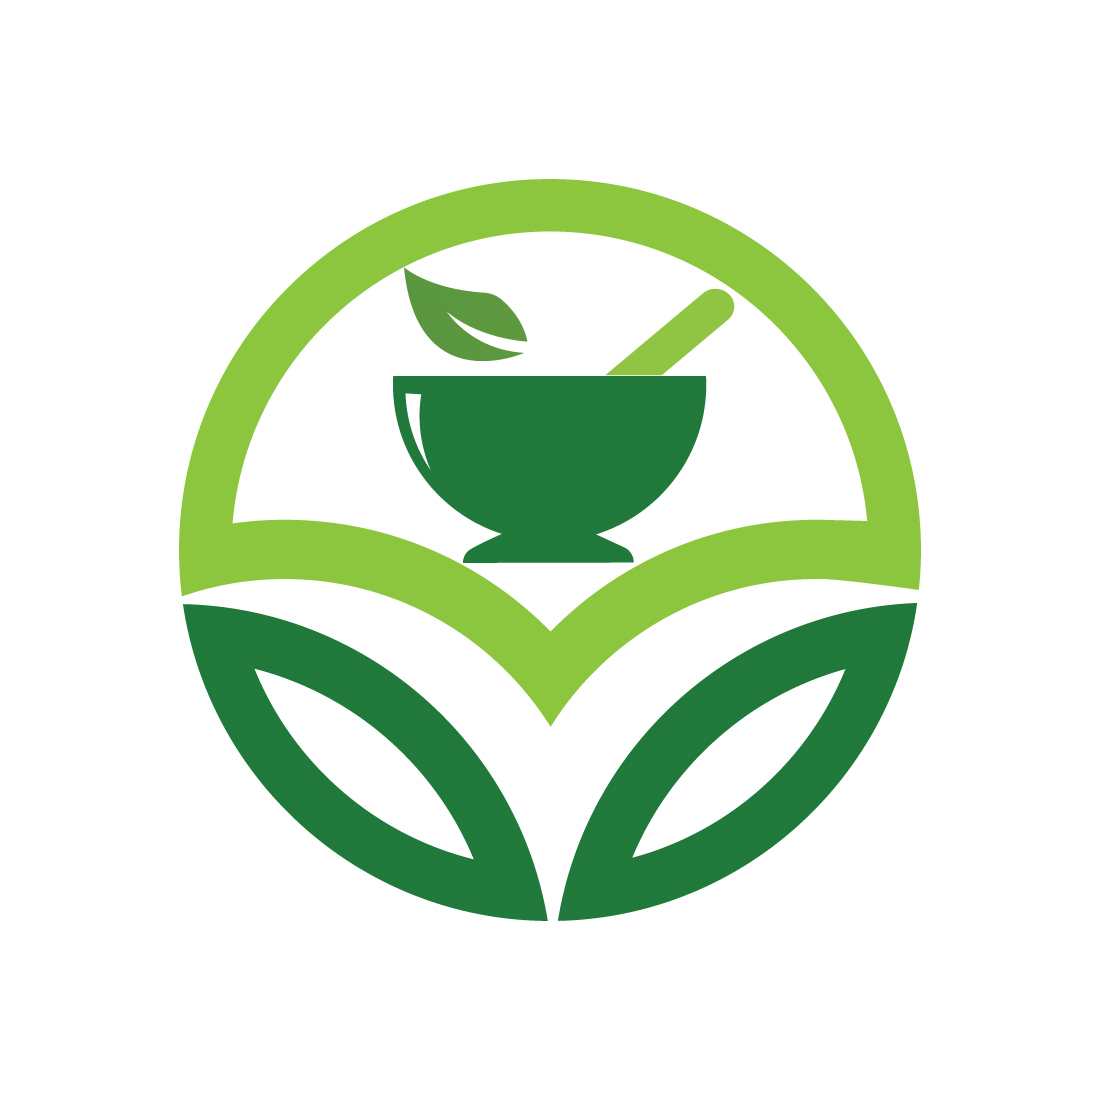 Green Herbal logo design vector images Green Vegetable logo Vegan food, healthy soup vector logo best identity preview image.